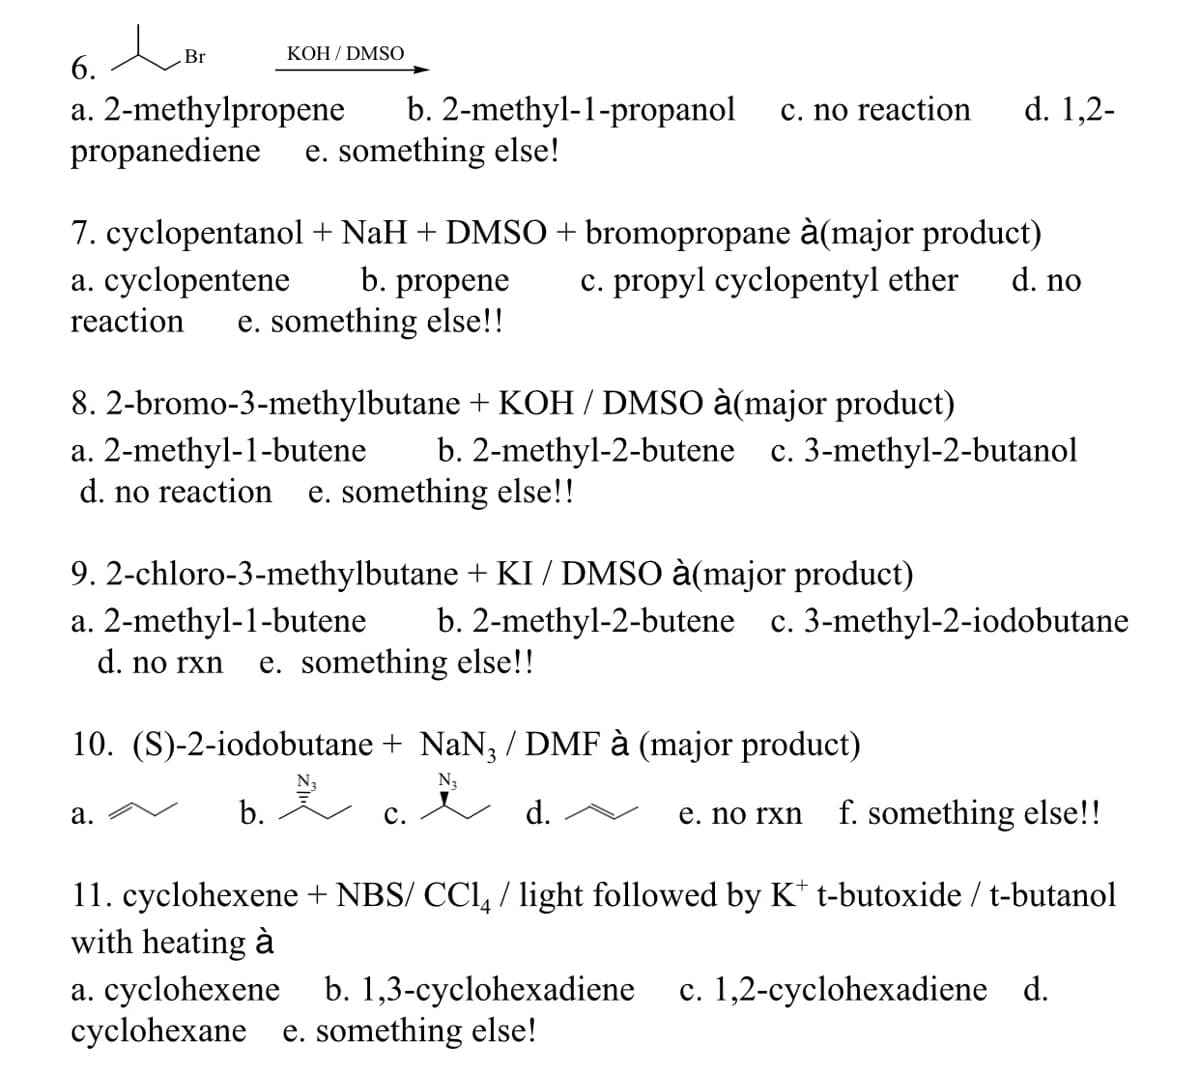 Br
KOH / DMSO
6.
b. 2-methyl-1-propanol
d. 1,2-
a. 2-methylpropene
propanediene
c. no reaction
e. something else!
7. cyclopentanol + NaH + DMSO+ bromopropane à(major product)
a. cyclopentene
reaction
b. propene
c. propyl cyclopentyl ether
d. no
e. something else!!
8. 2-bromo-3-methylbutane + KOH / DMSO à(major product)
a. 2-methyl-1-butene
d. no reaction
b. 2-methyl-2-butene c. 3-methyl-2-butanol
e. something else!!
9. 2-chloro-3-methylbutane + KI / DMSO à(major product)
a. 2-methyl-1-butene
b. 2-methyl-2-butene
c. 3-methyl-2-iodobutane
d. no rxn
e. something else!!
10. (S)-2-iodobutane + NaN; / DMF à (major product)
N3
c.
f. something else!!
а.
b.
с.
d.
е. no rxn
11. cyclohexene + NBS/ CCl, / light followed by K* t-butoxide / t-butanol
with heating à
a. cyclohexene b. 1,3-cyclohexadiene
cyclohexane e. something else!
c. 1,2-cyclohexadiene d.
